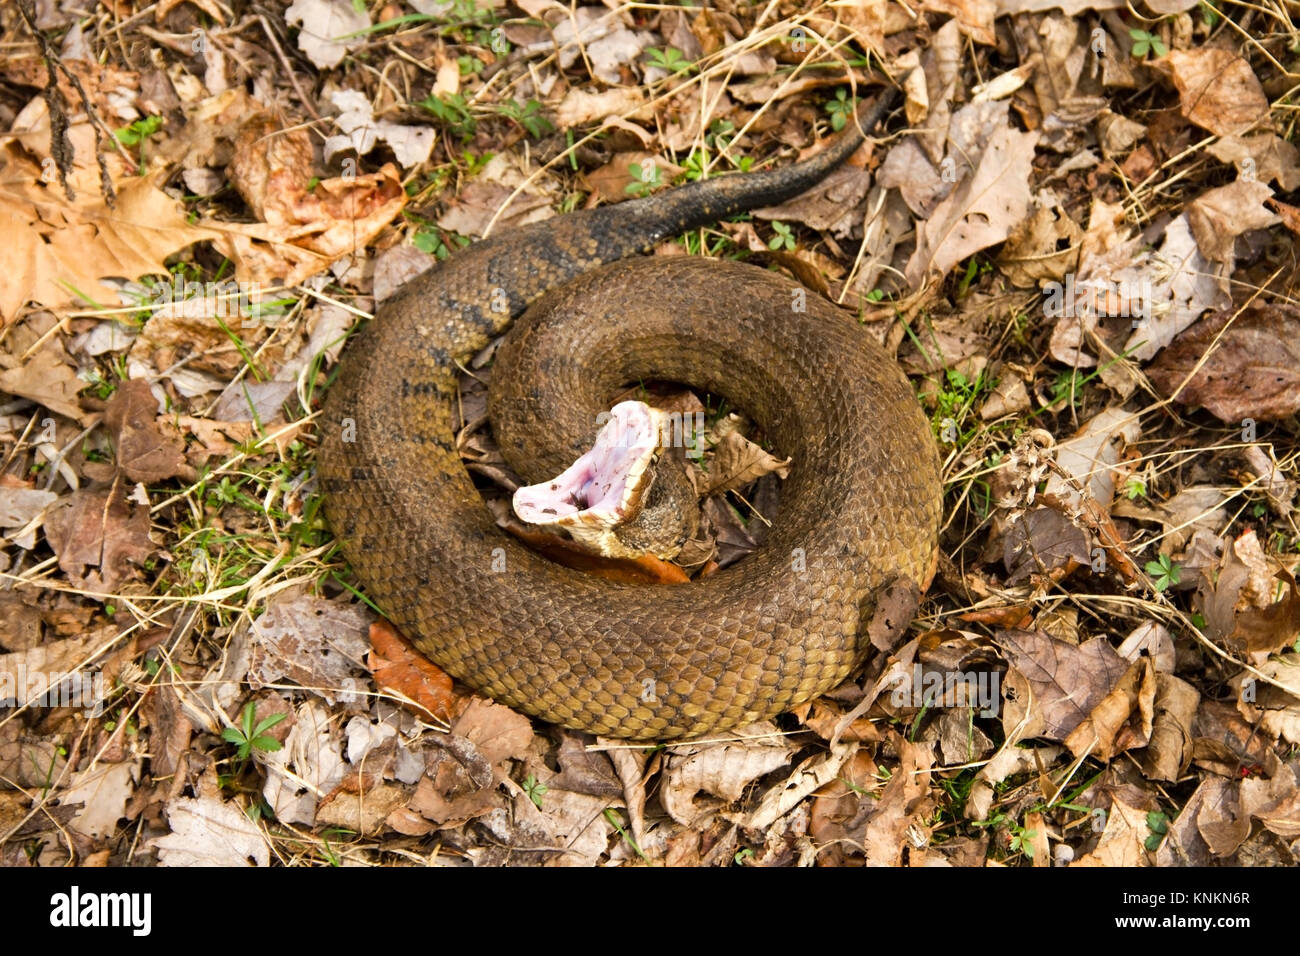 Cottonmouth snake (Agkistrodon piscivorus) showing classic threat display behavior Stock Photo